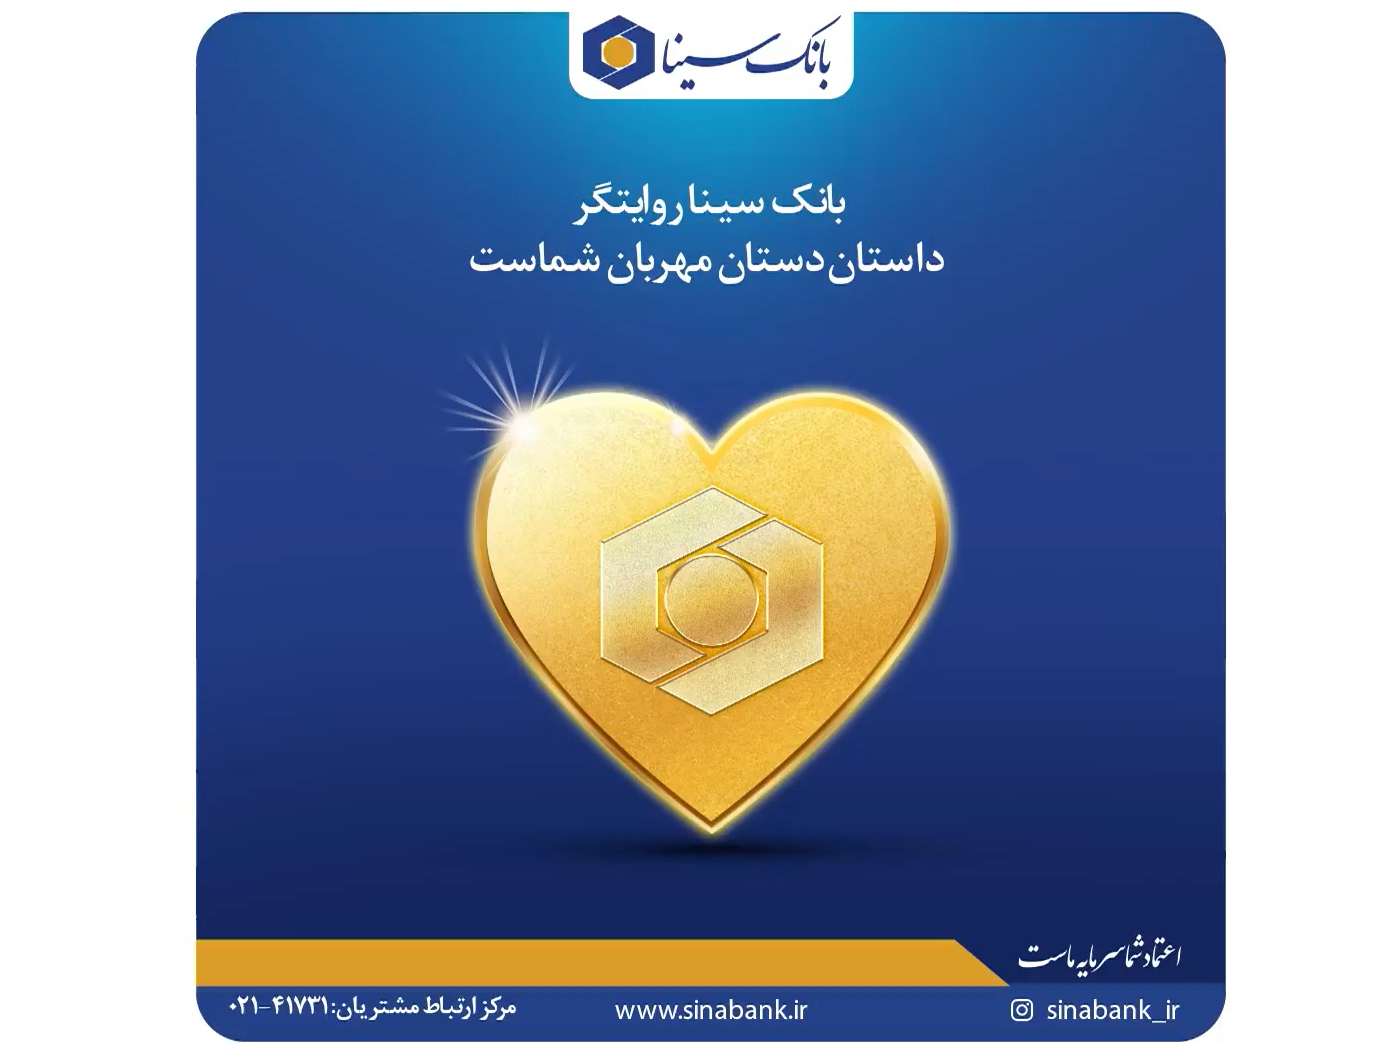 Sina Bank Qarzolhasane Moshion 1 cover 1 بانک سینا